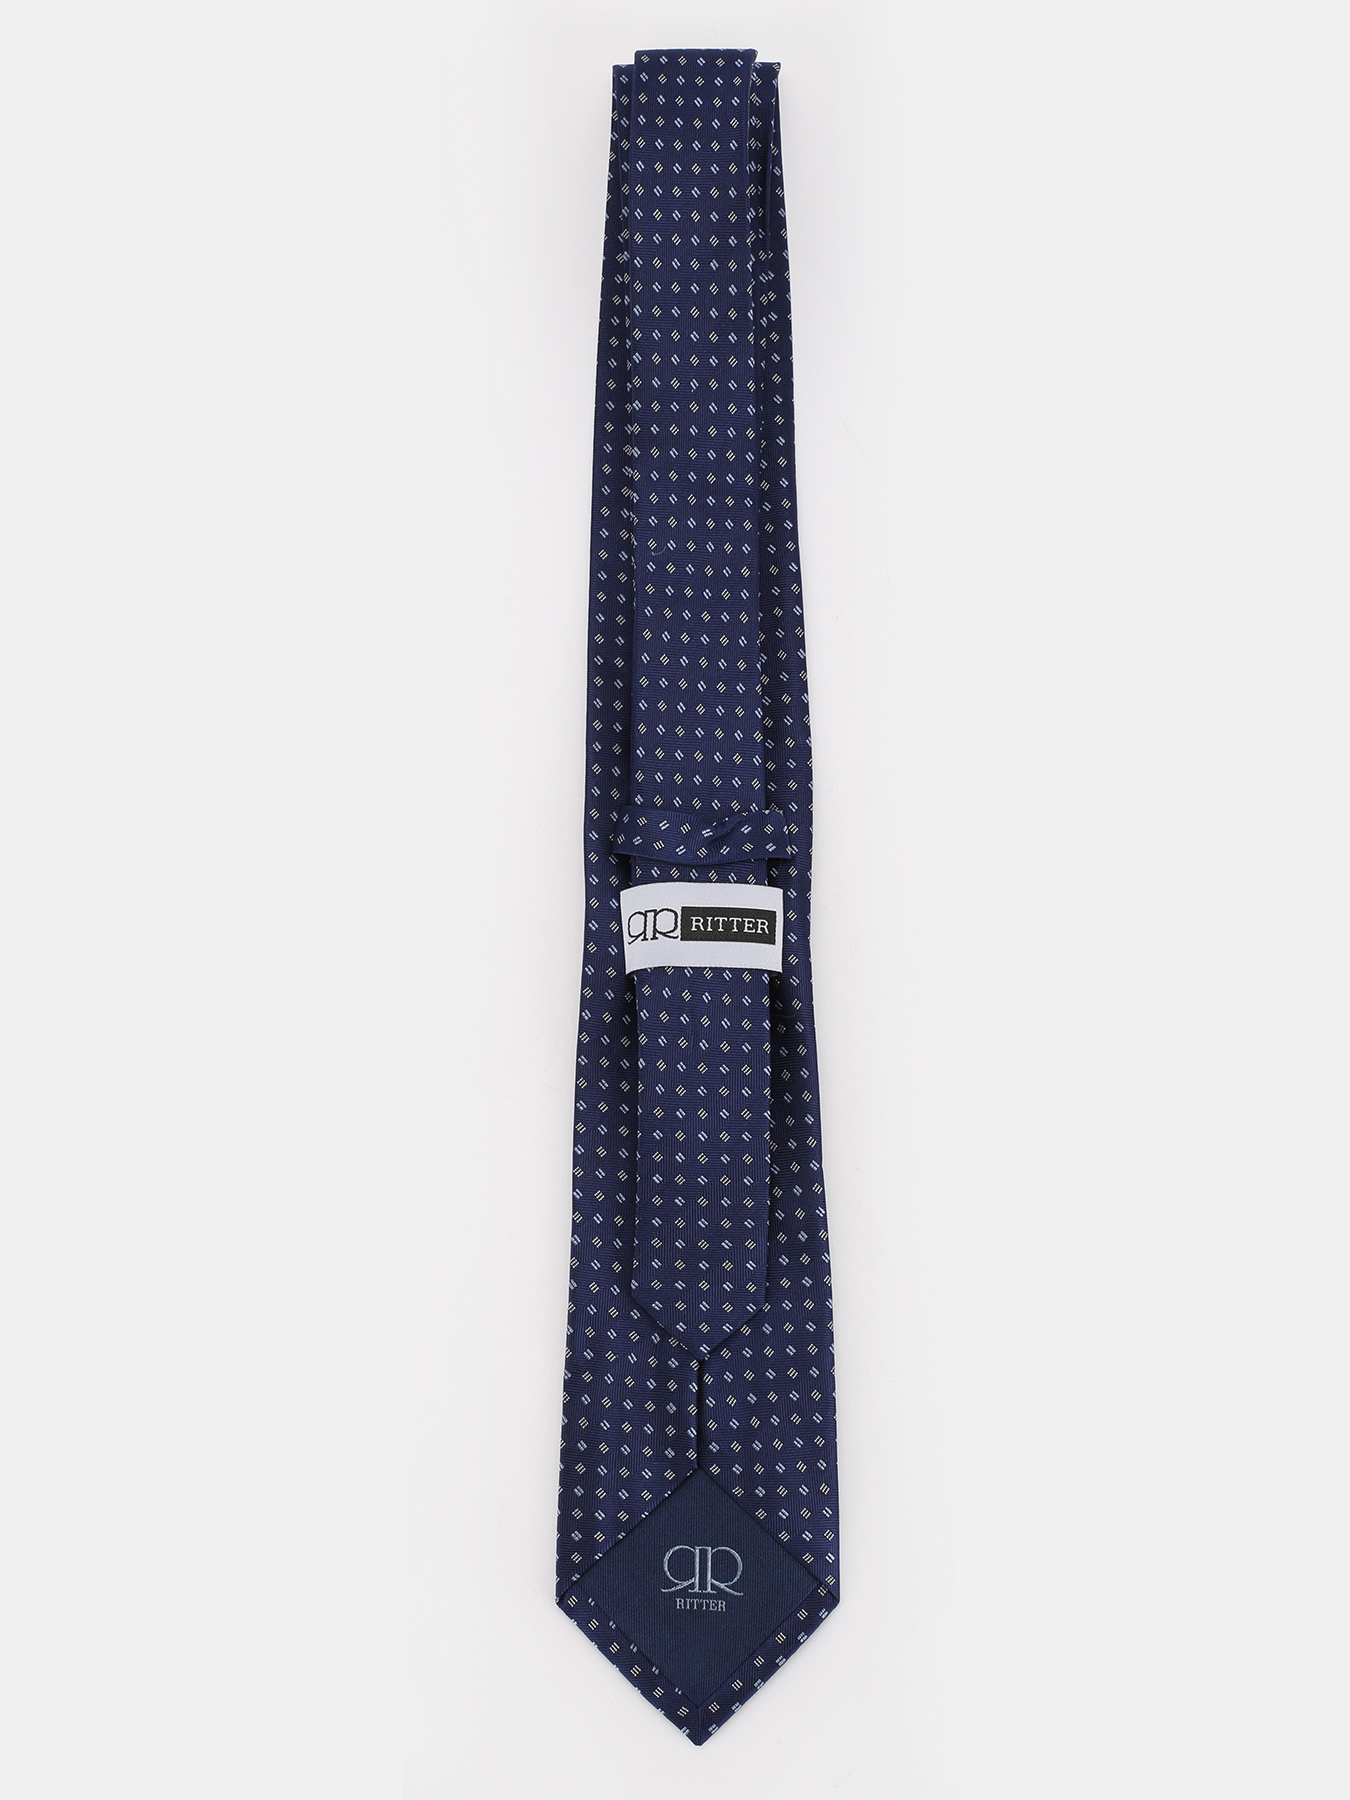 Ritter Шелковый галстук с узорами 323006-185 Фото 2